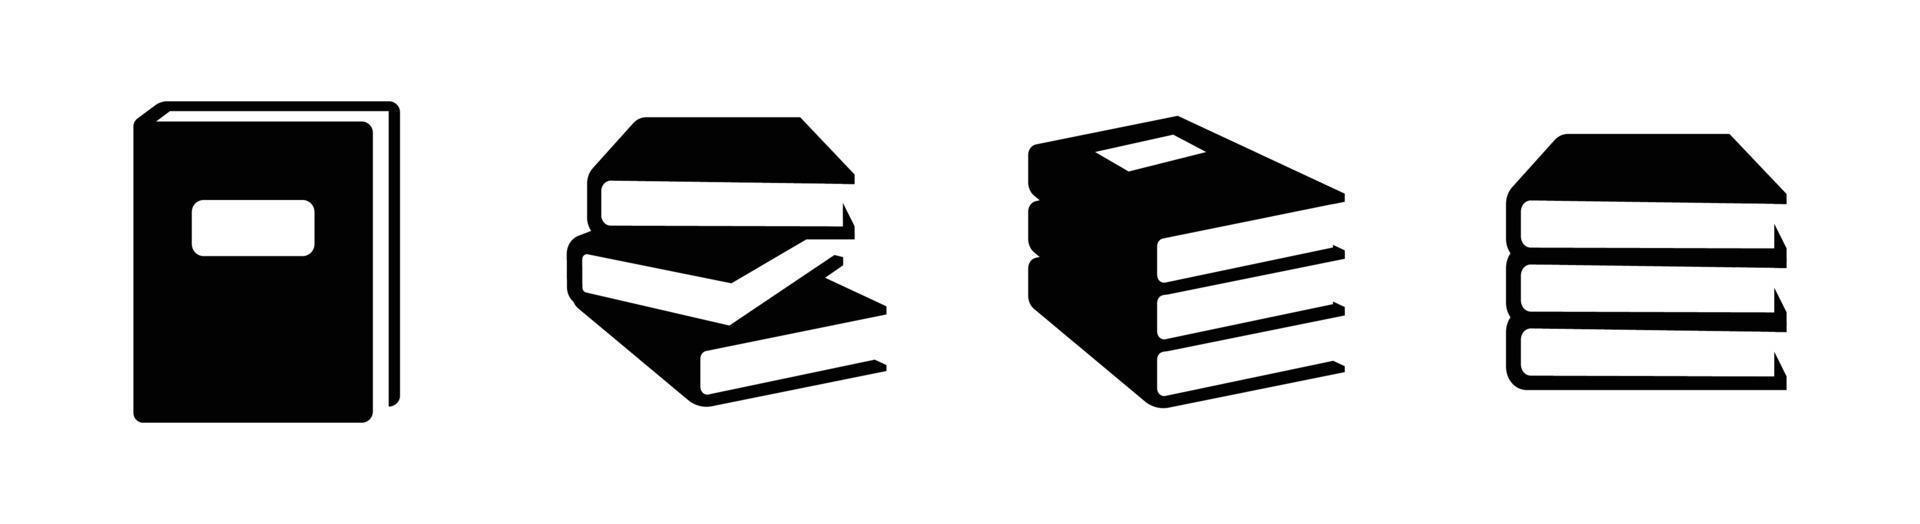 Book icon design element suitable for website, print design or app vector